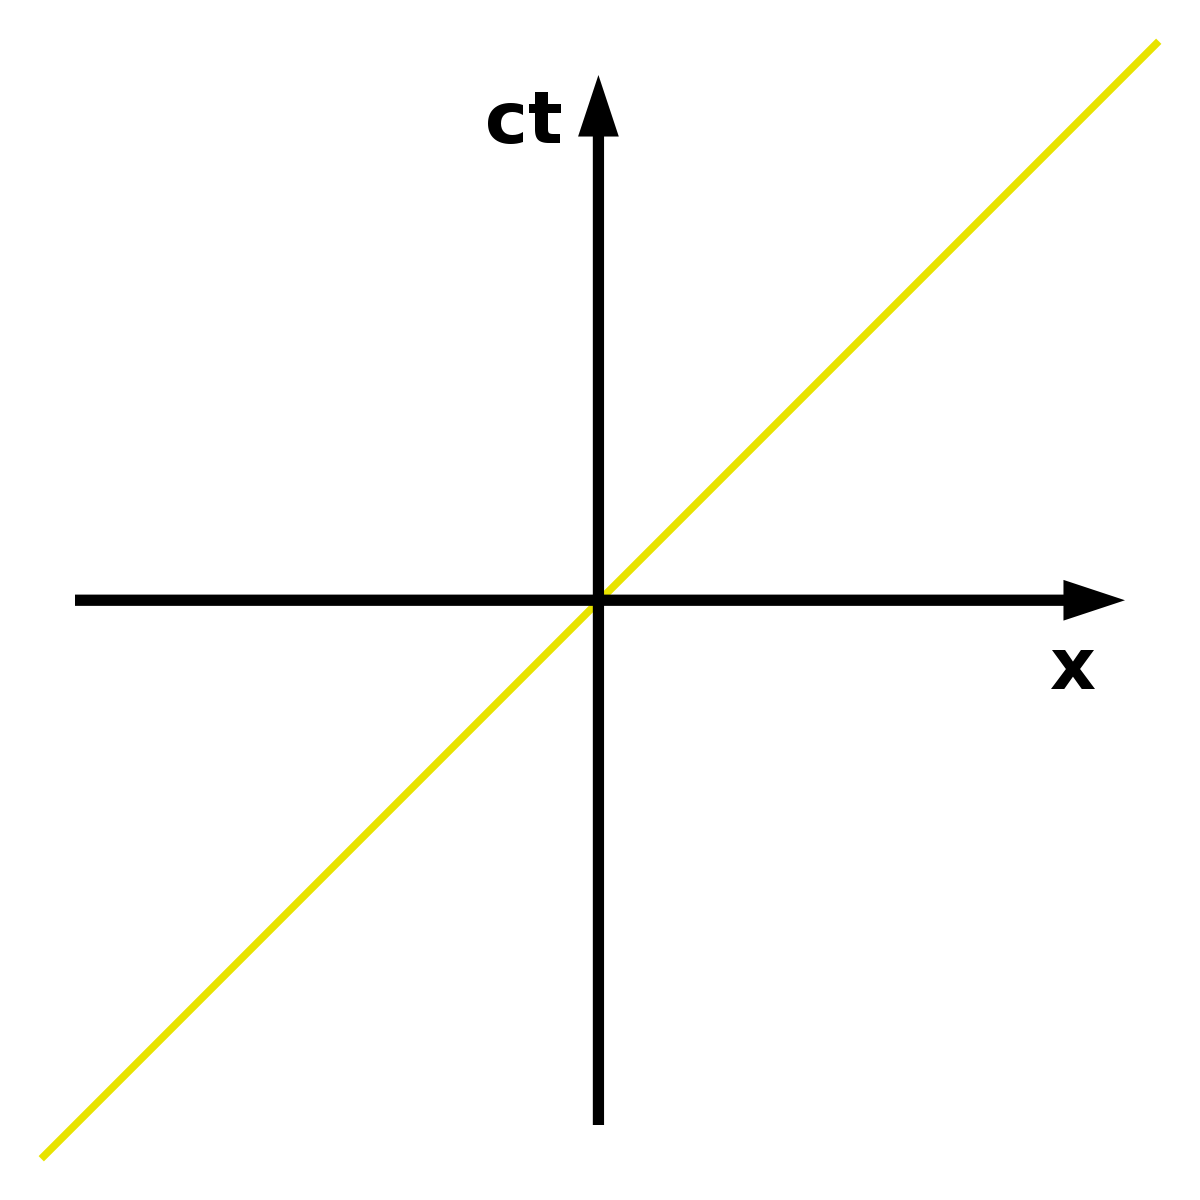 Spacetime diagram - Wikipedia